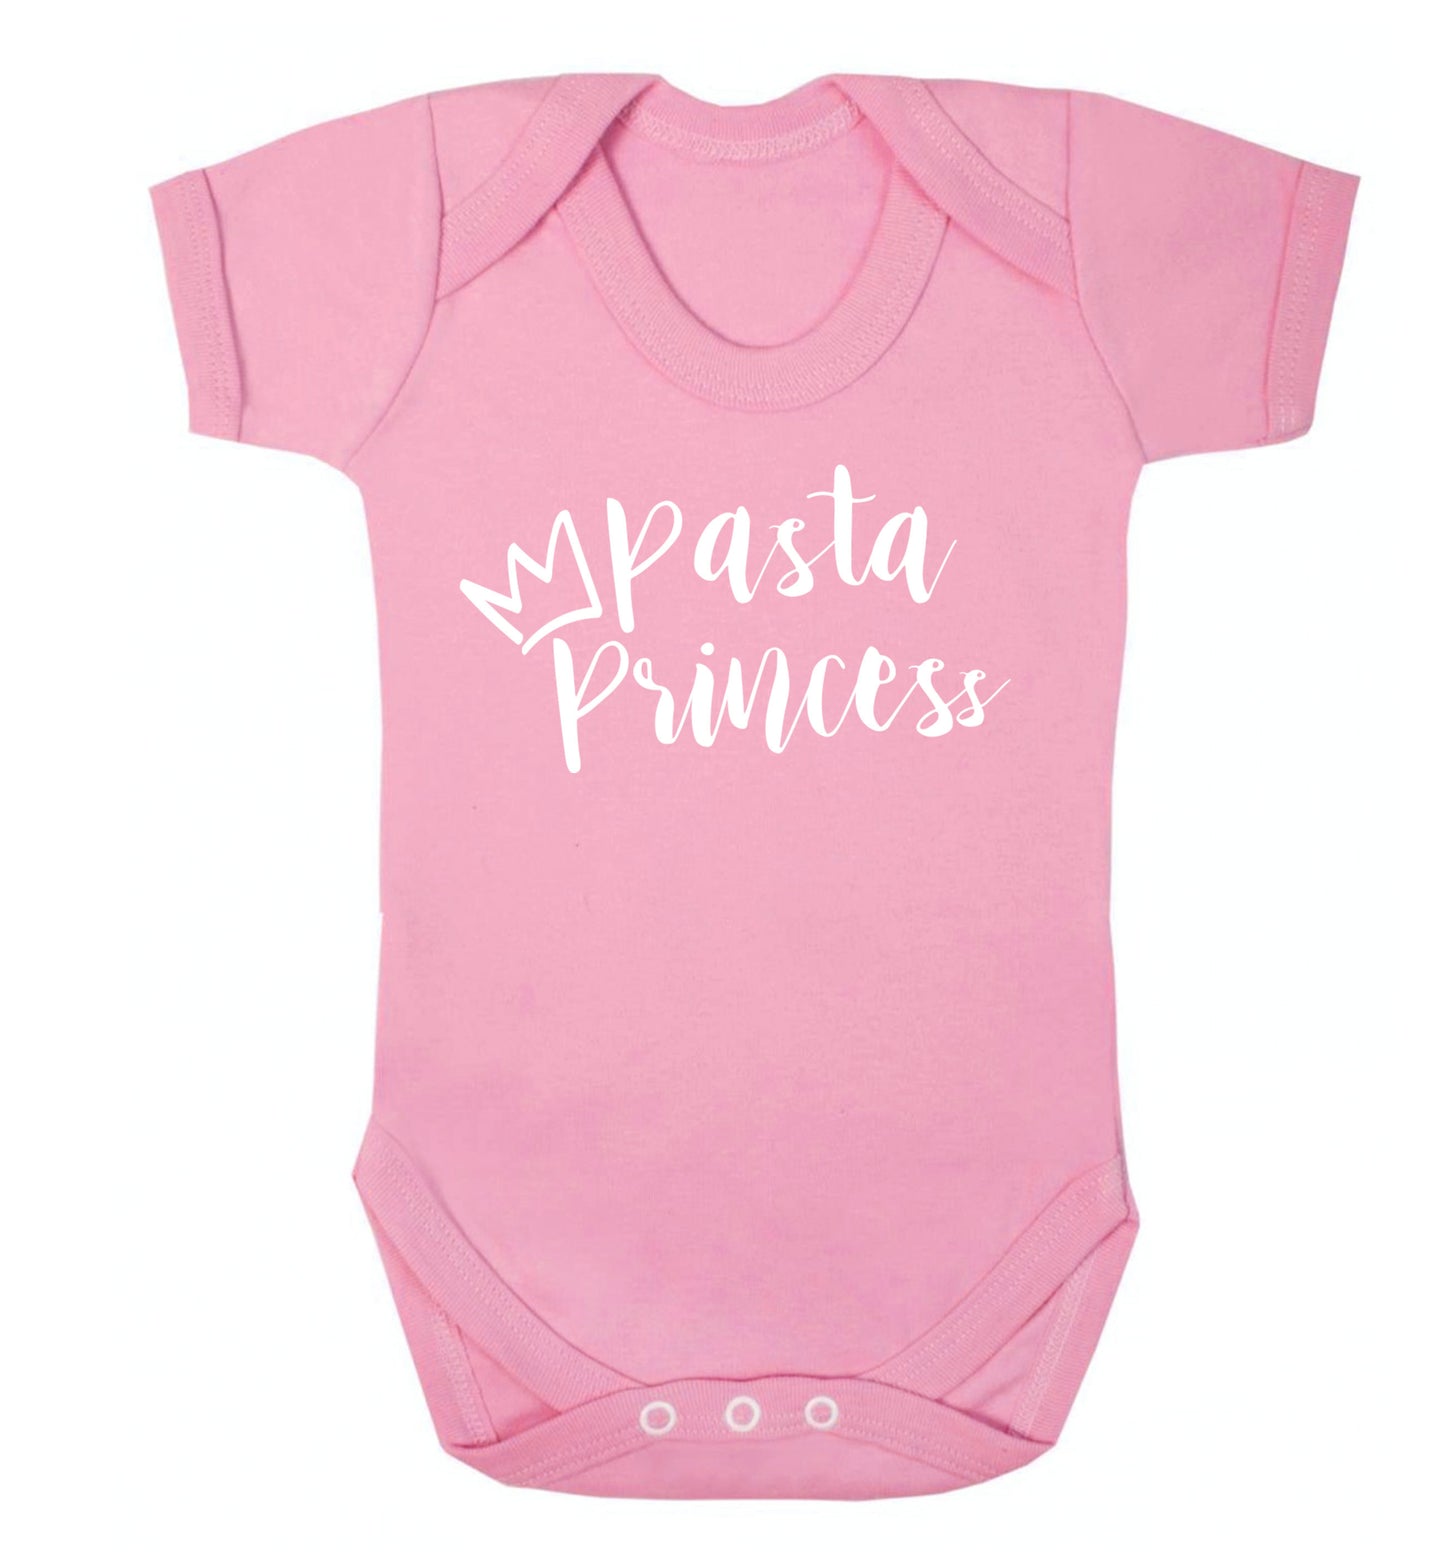 Pasta Princess Baby Vest pale pink 18-24 months